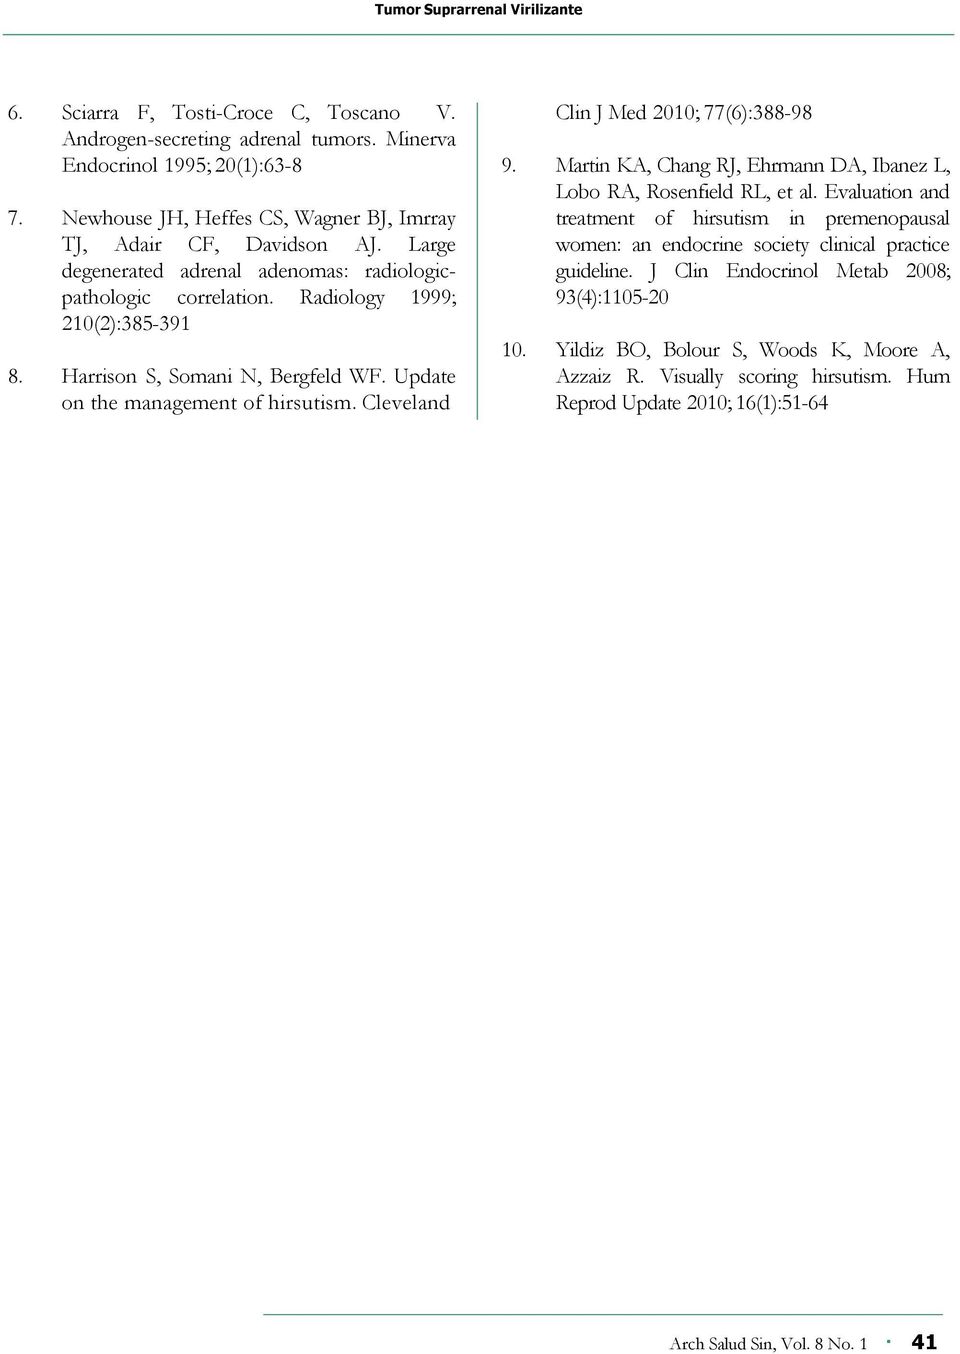 2010; 77(6):388-98 9 Martin KA, Chang RJ, Ehrmann DA, Ibanez L, Lobo RA, Rosenfield RL, et al Evaluation and treatment of hirsutism in premenopausal women: an endocrine society clinical